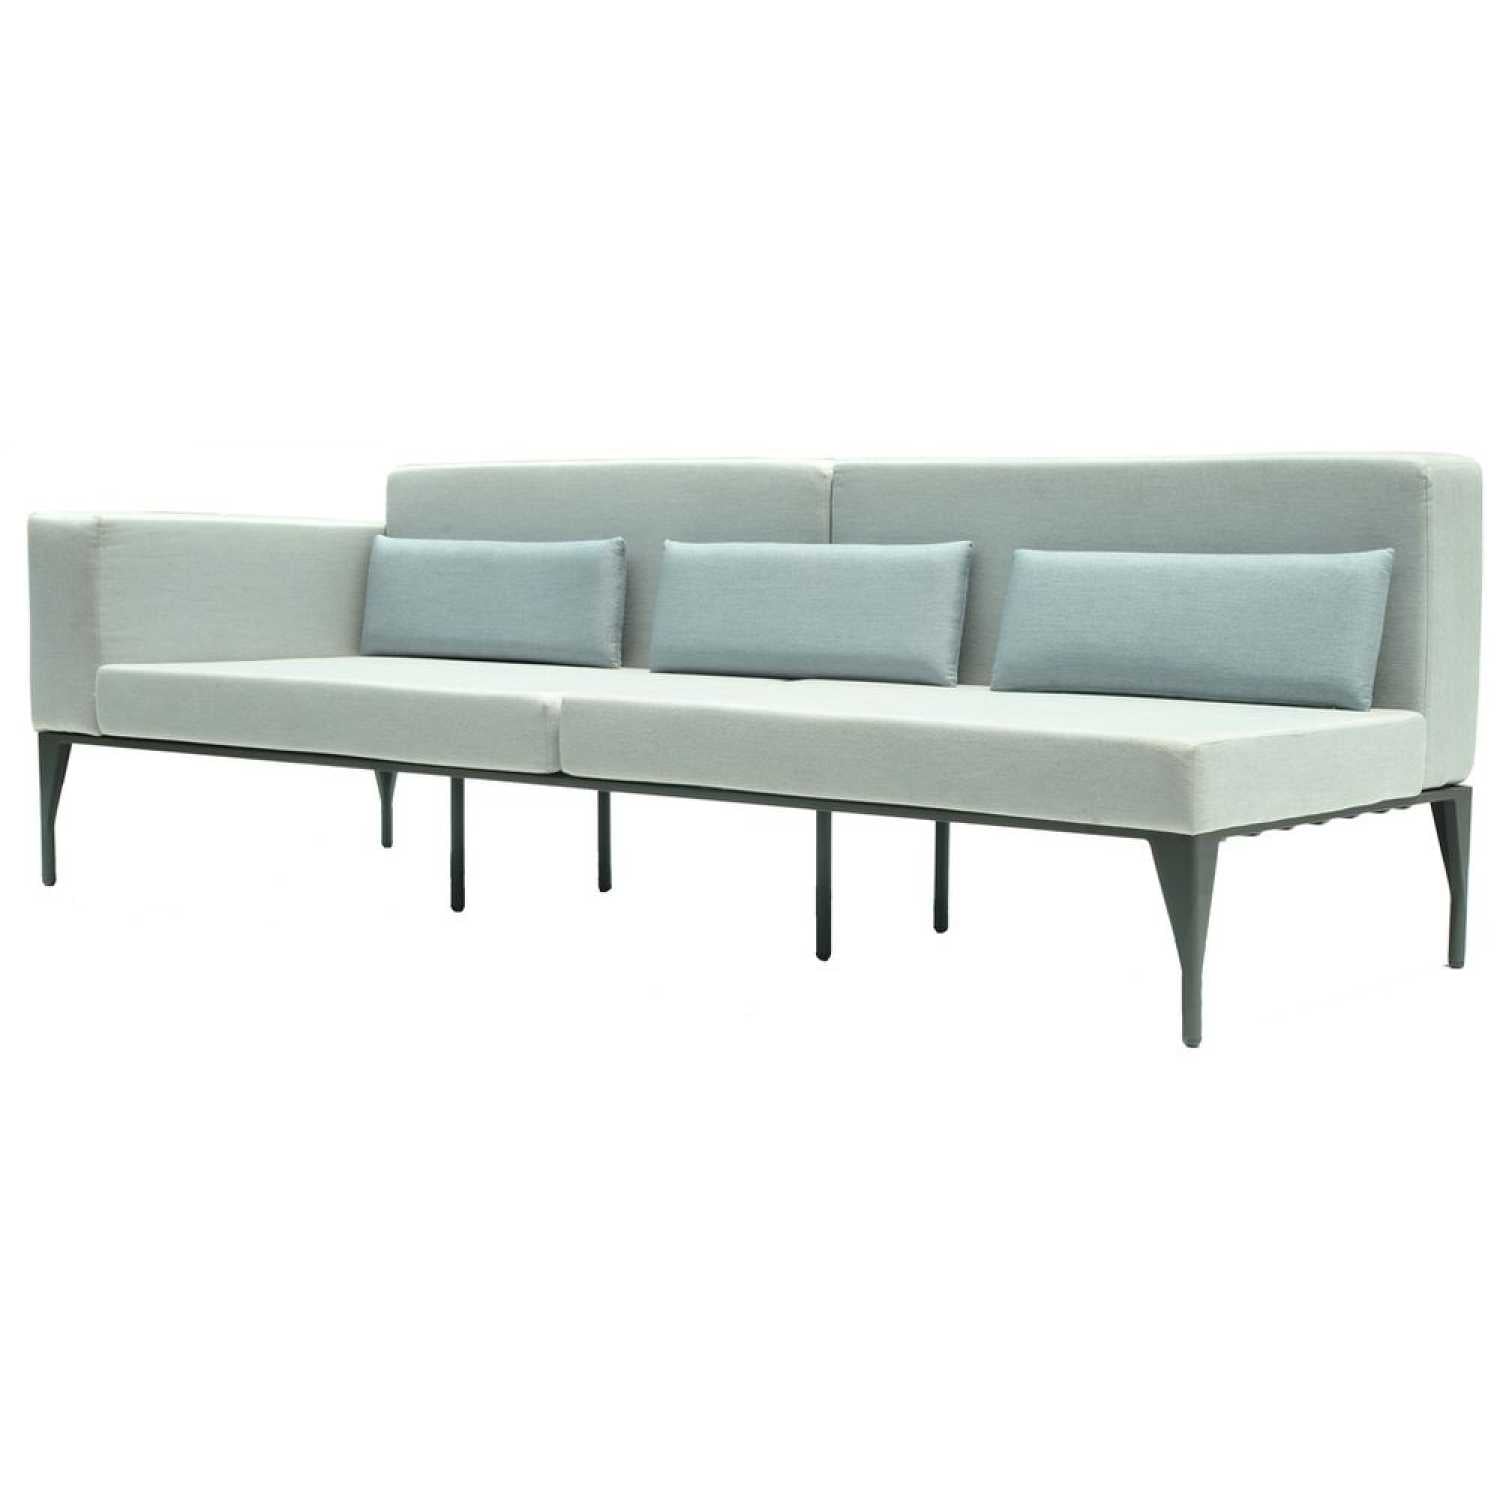 Brenham Right Sofa - PadioLiving - Brenham Right Sofa - Outdoor Sofa - Panama Artic(£3017) - PadioLiving